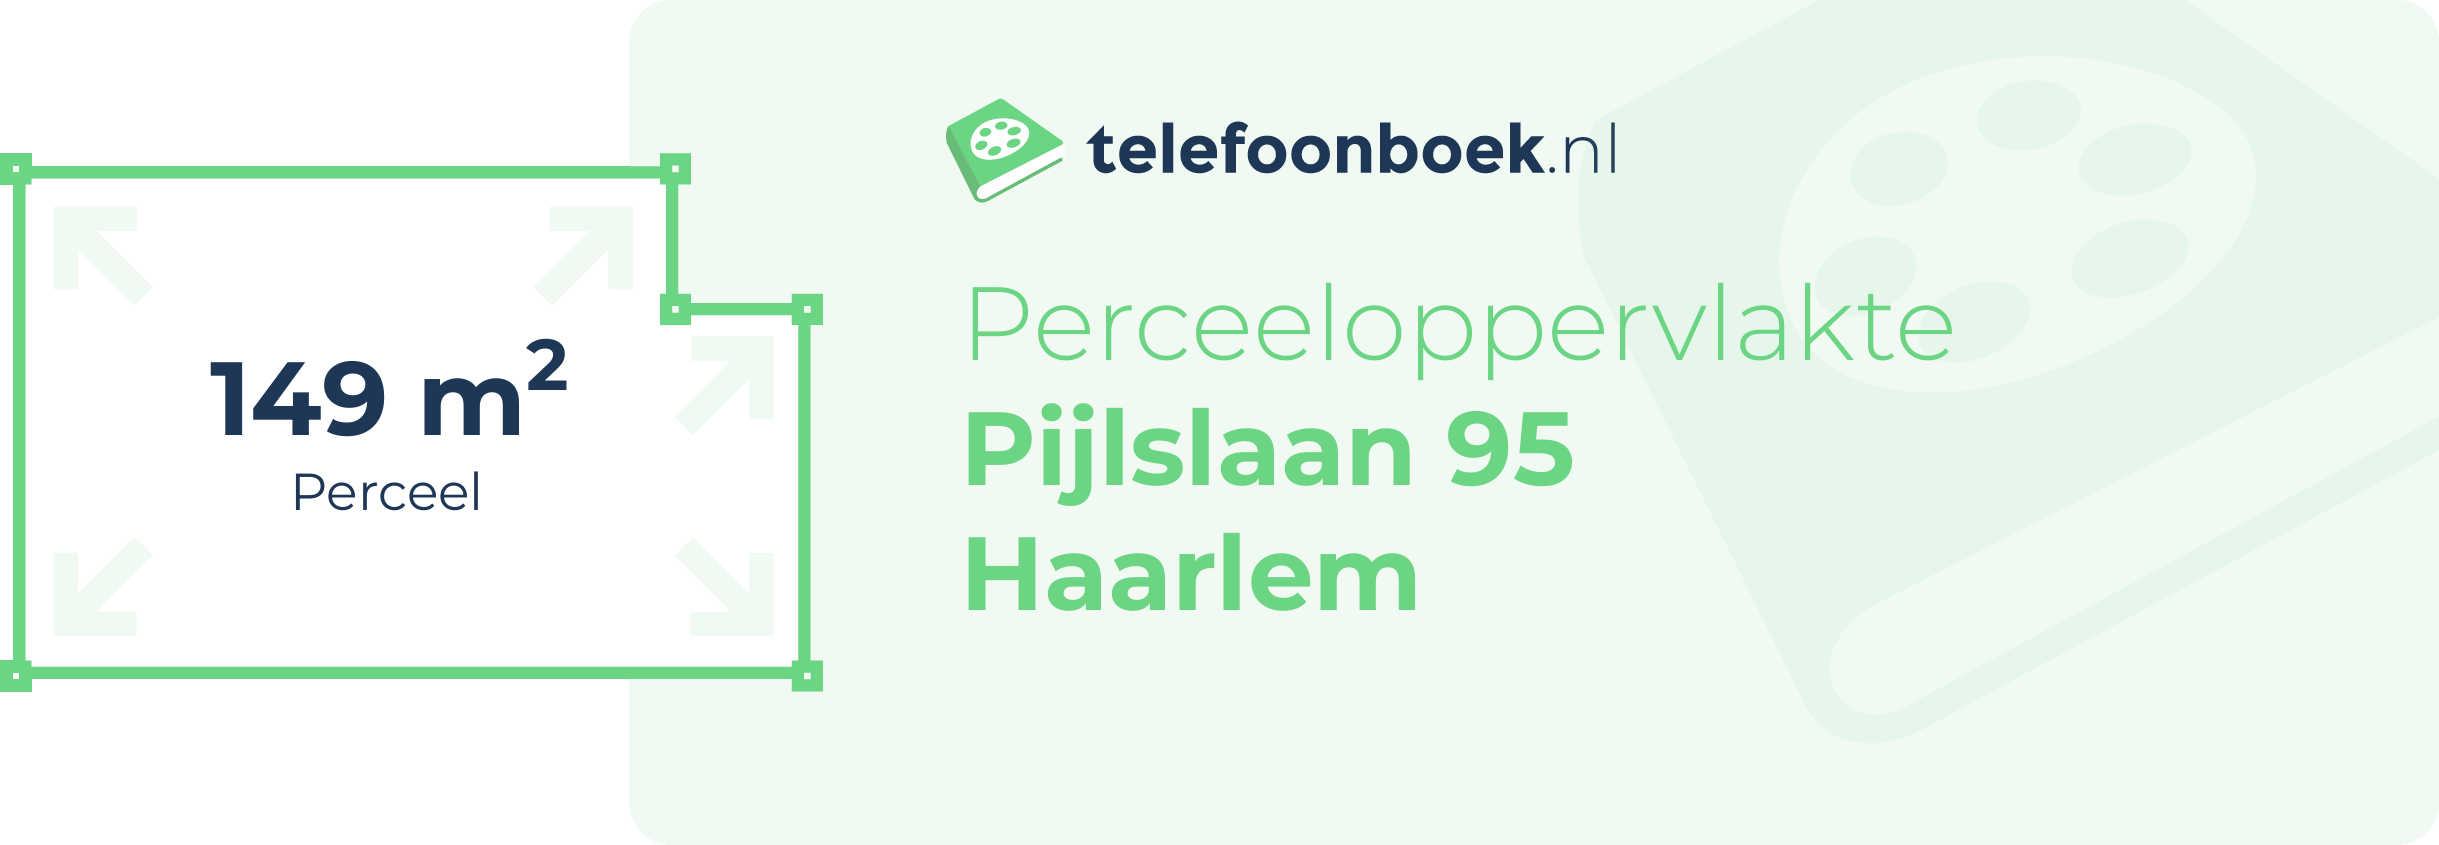 Perceeloppervlakte Pijlslaan 95 Haarlem